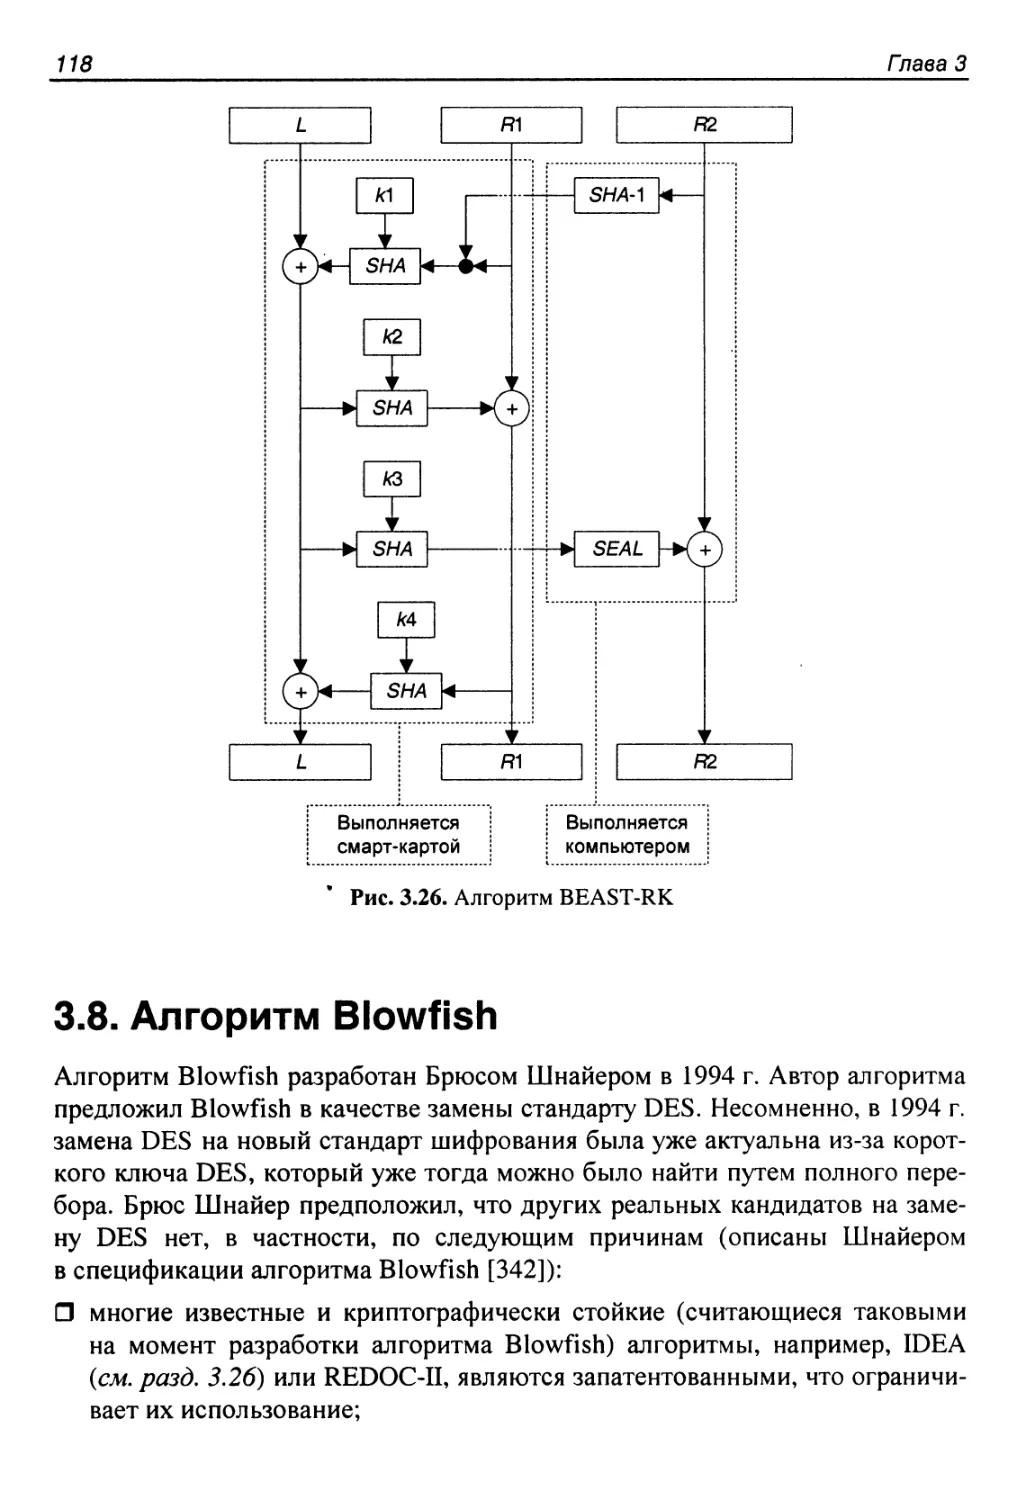 3.8. Алгоритм Blowfish